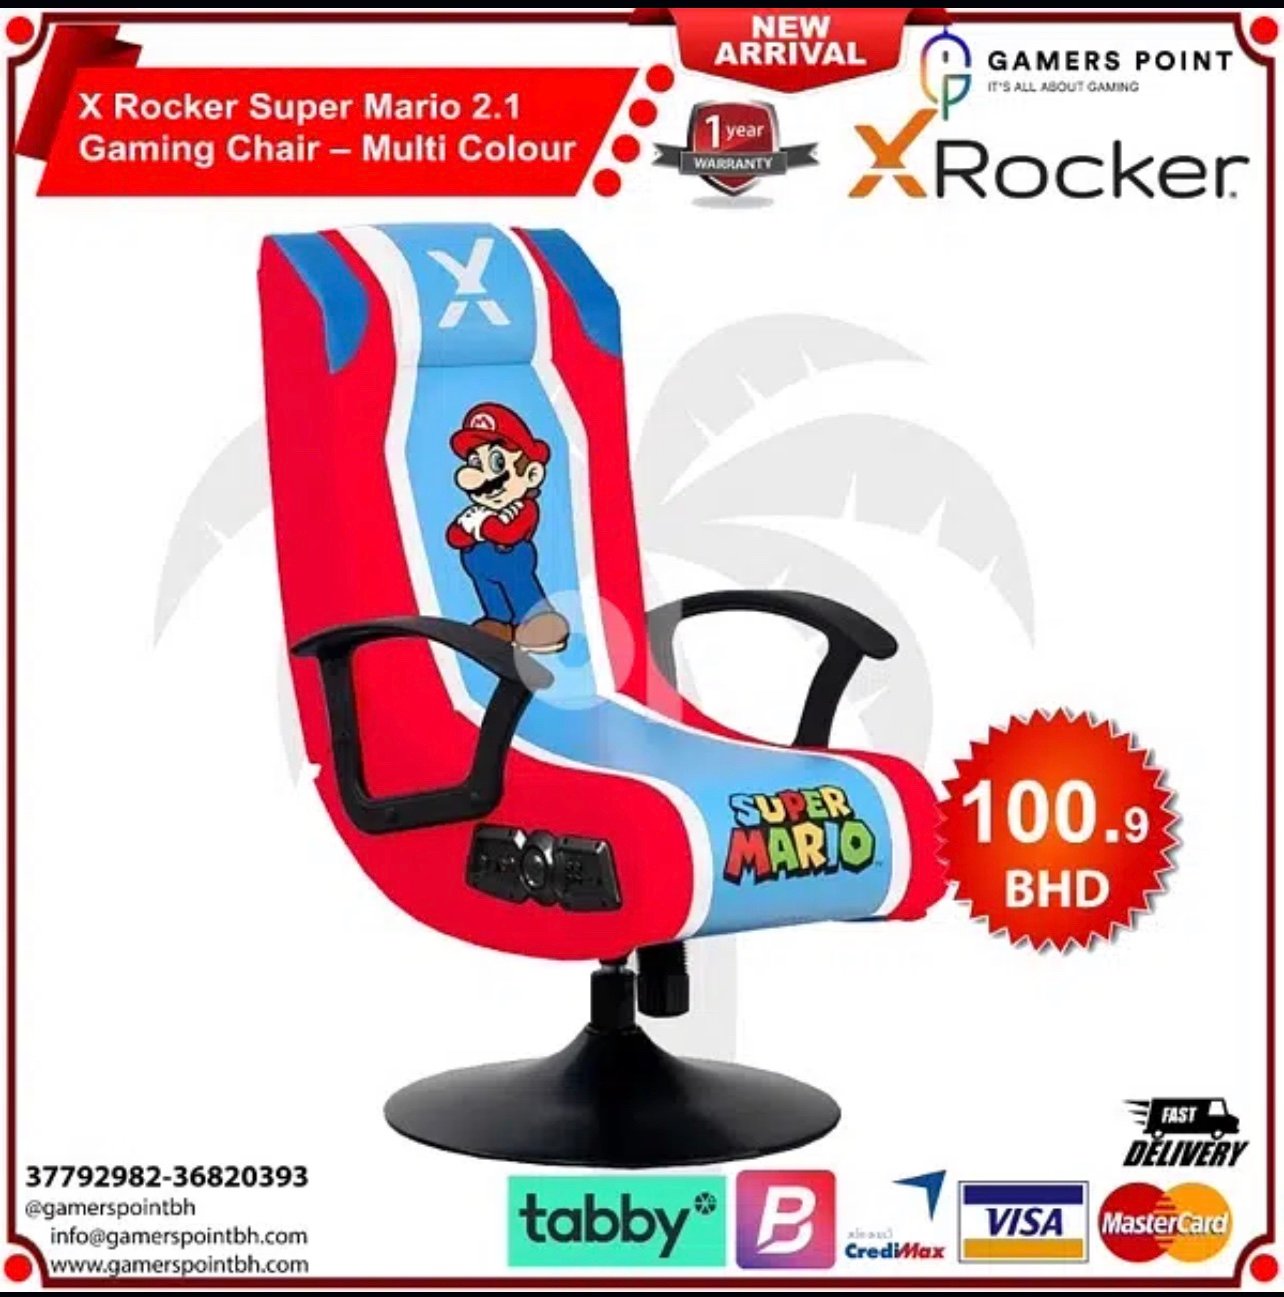 X Rocker Super Gaming Chair Mario Official 2.1 | Now In Bahrain